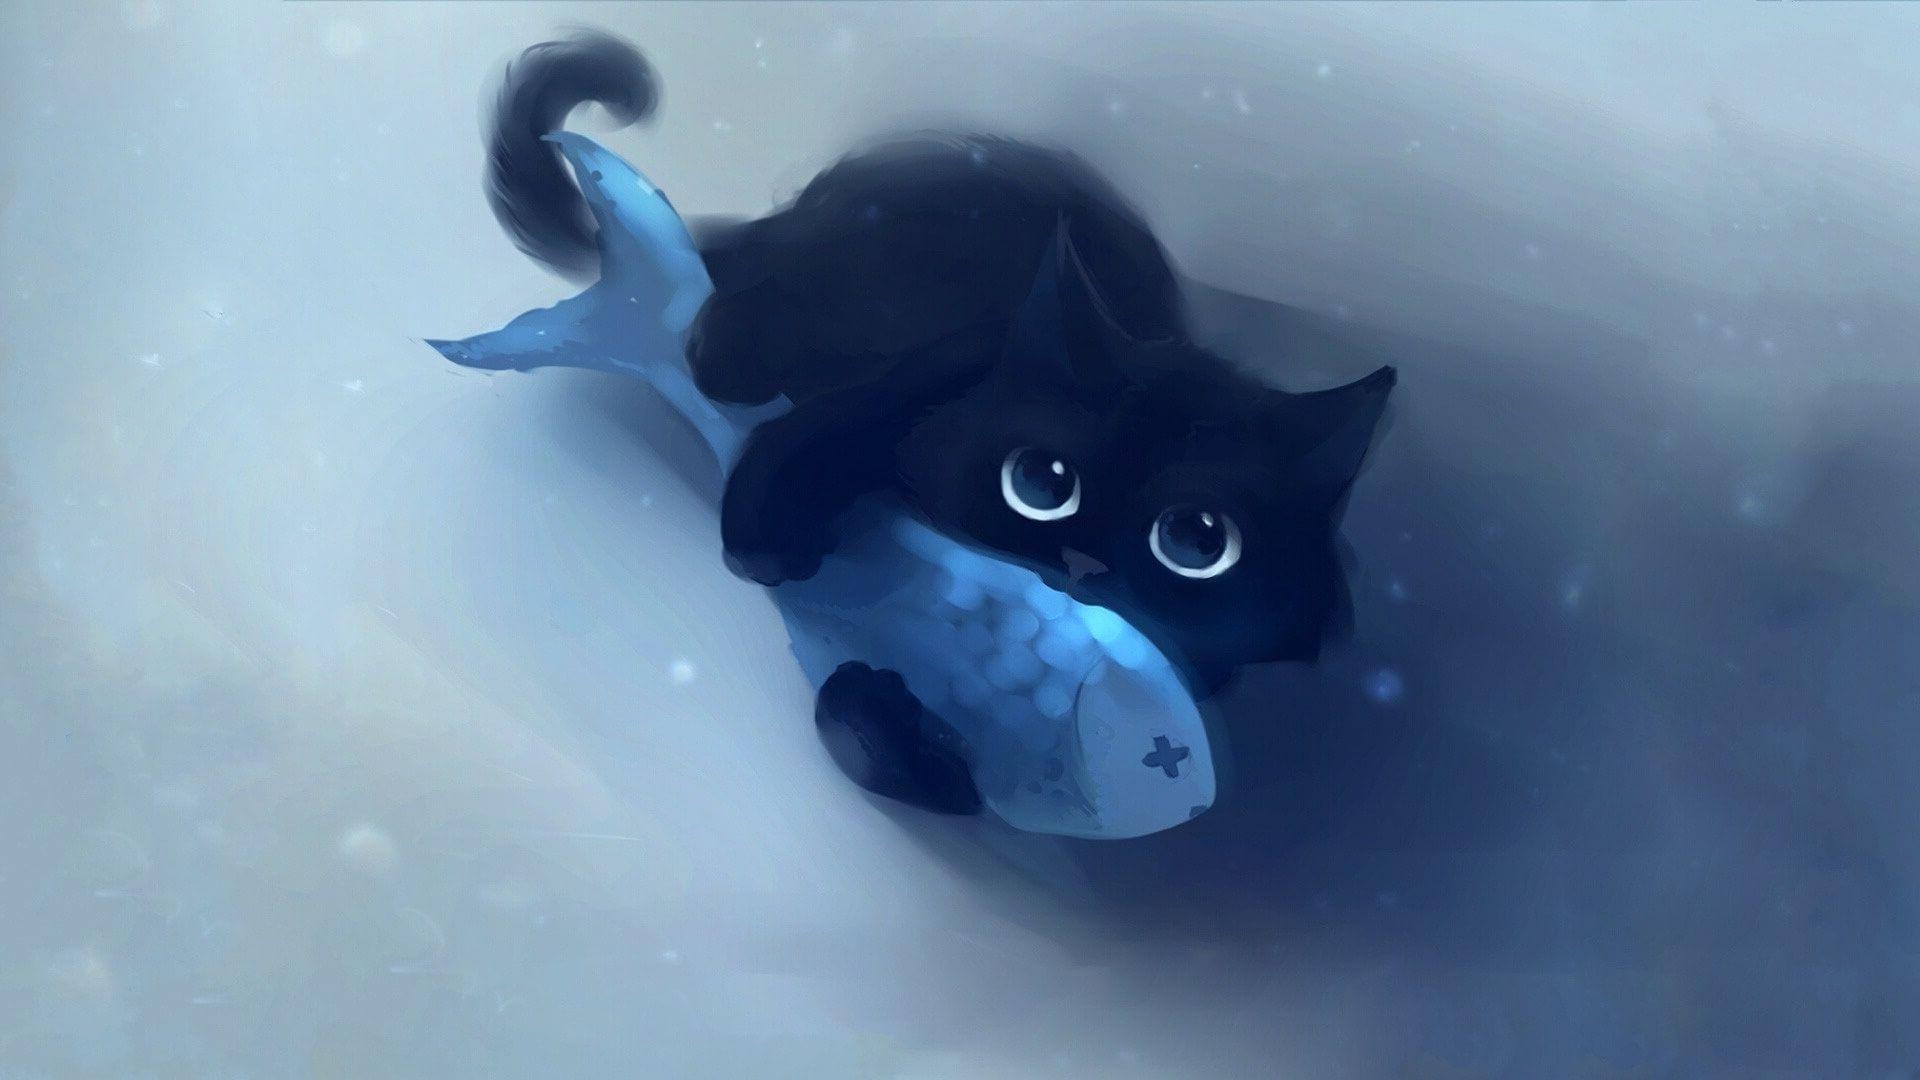 Cute Anime Cat - cartoon cat Wallpaper Download | MobCup